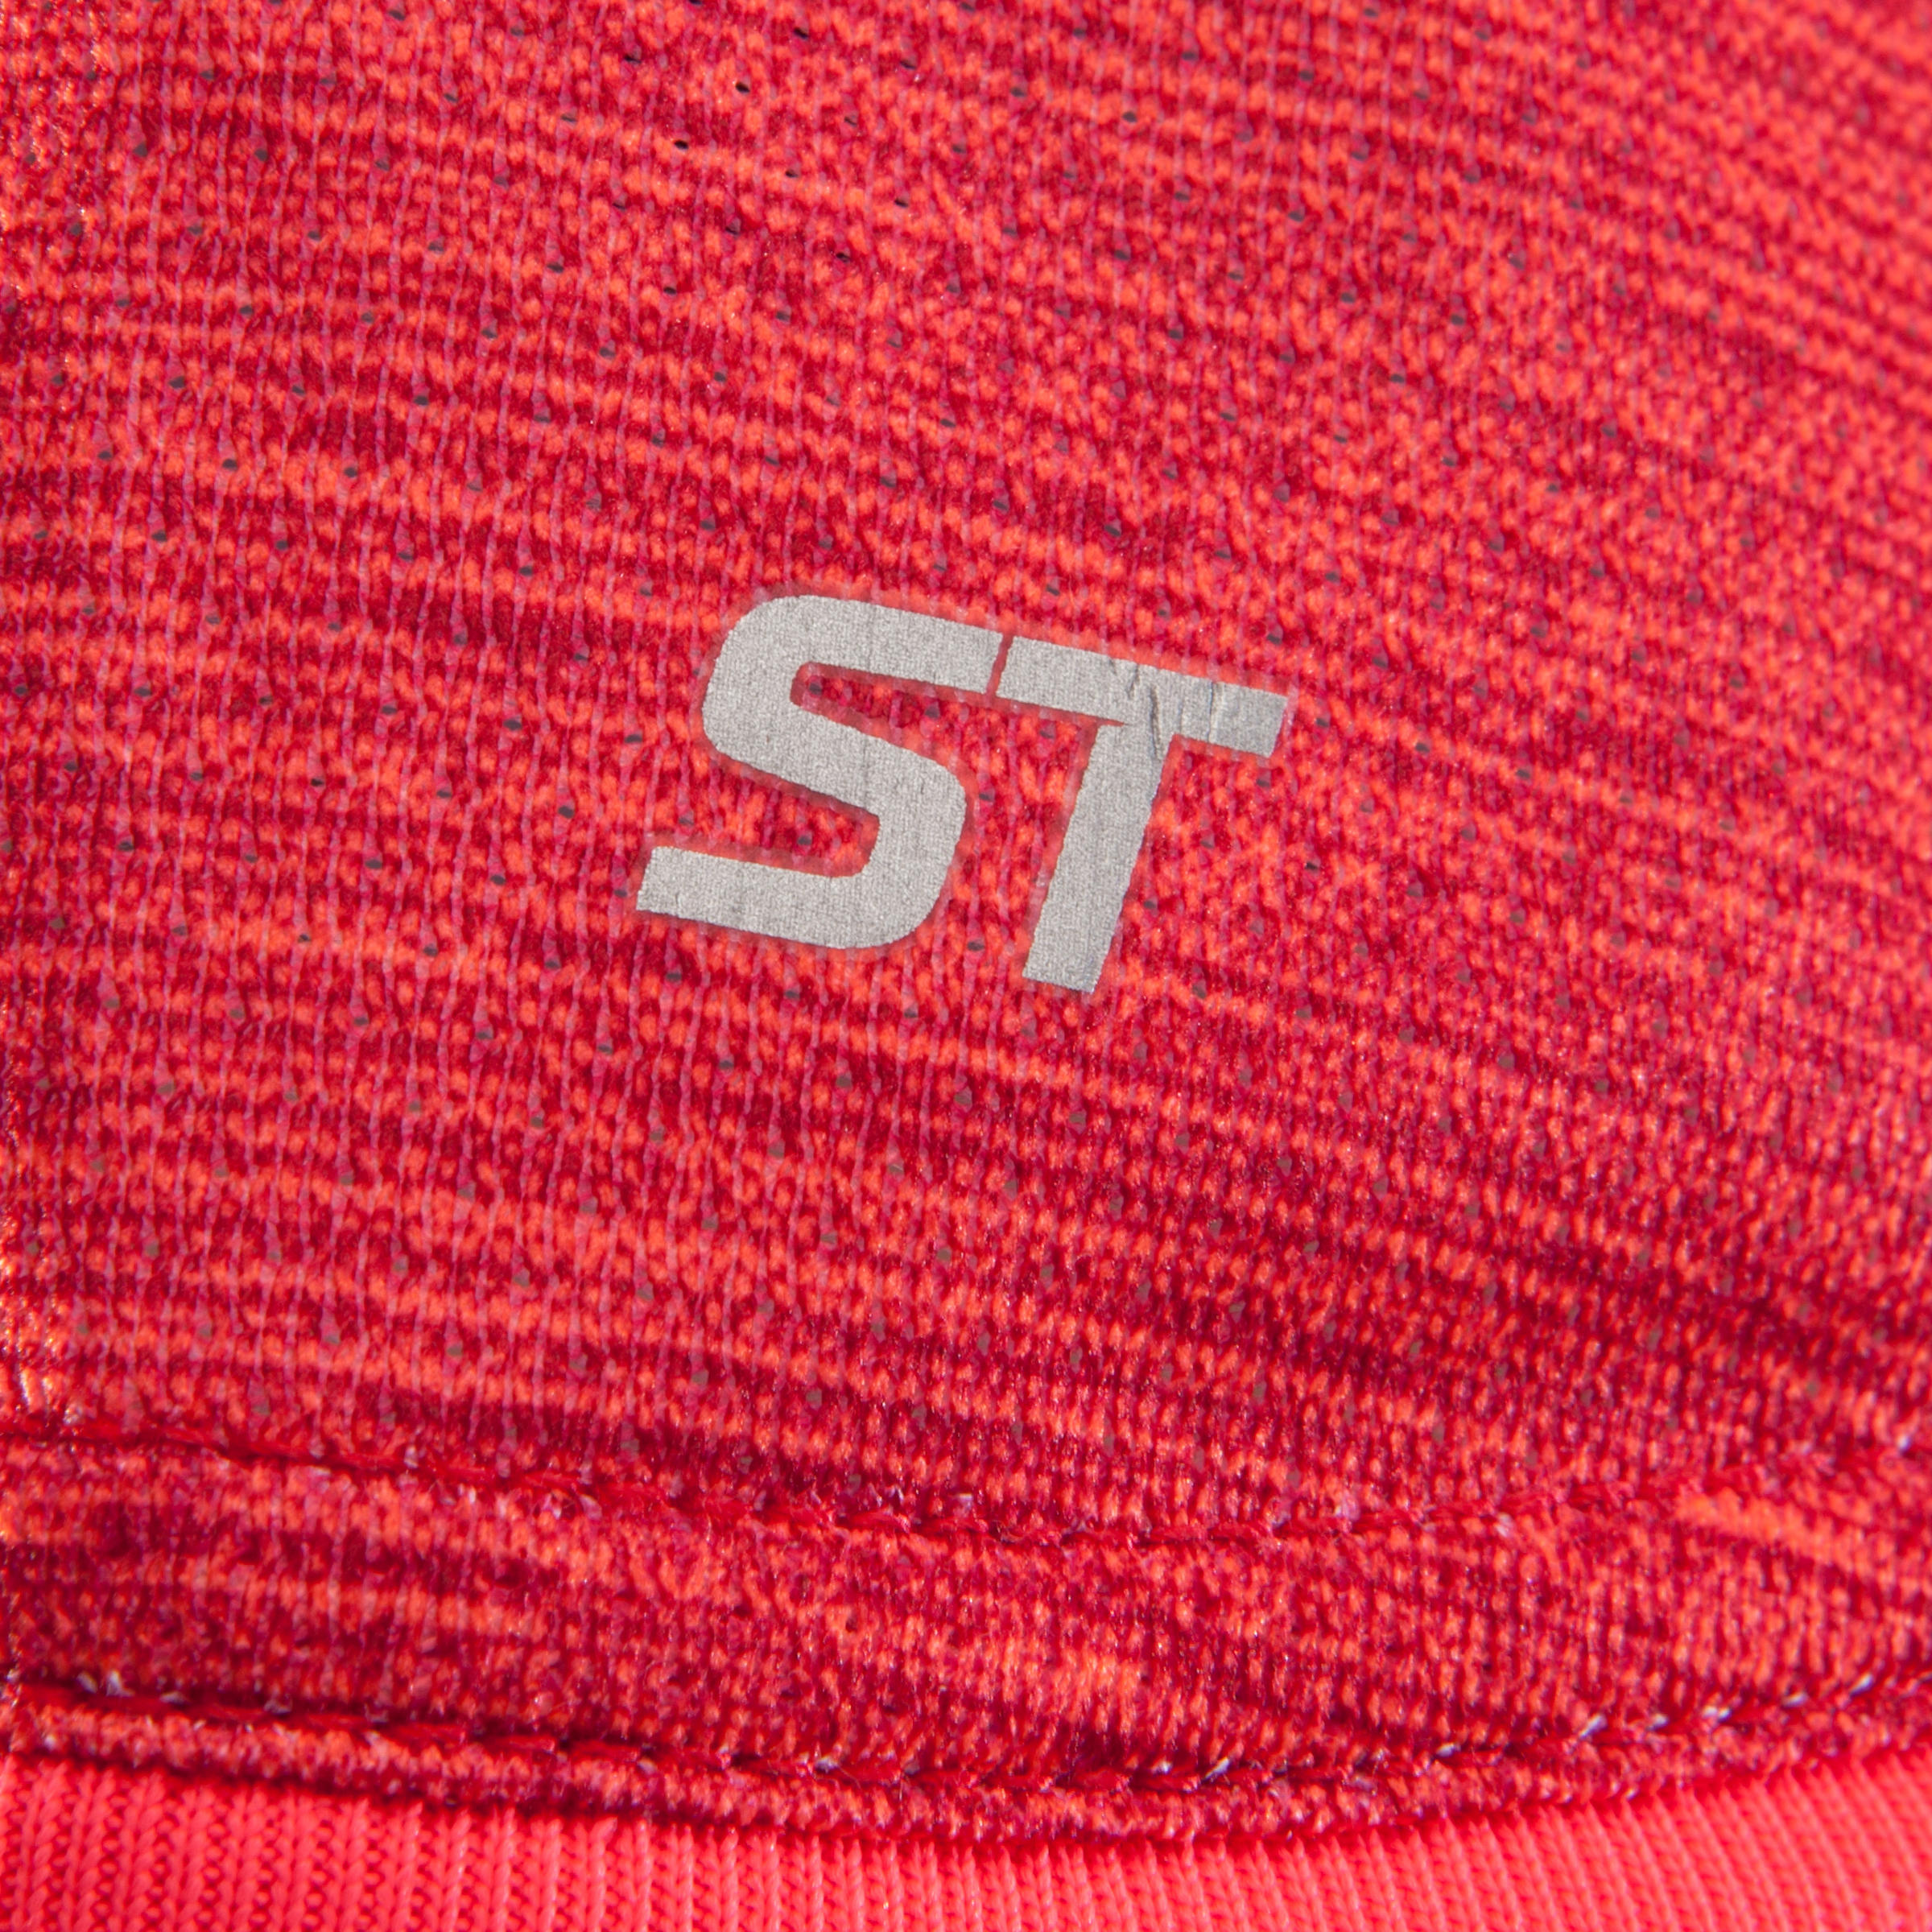 ST 100 Short-Sleeved Mountain Biking Jersey - Pink 5/5